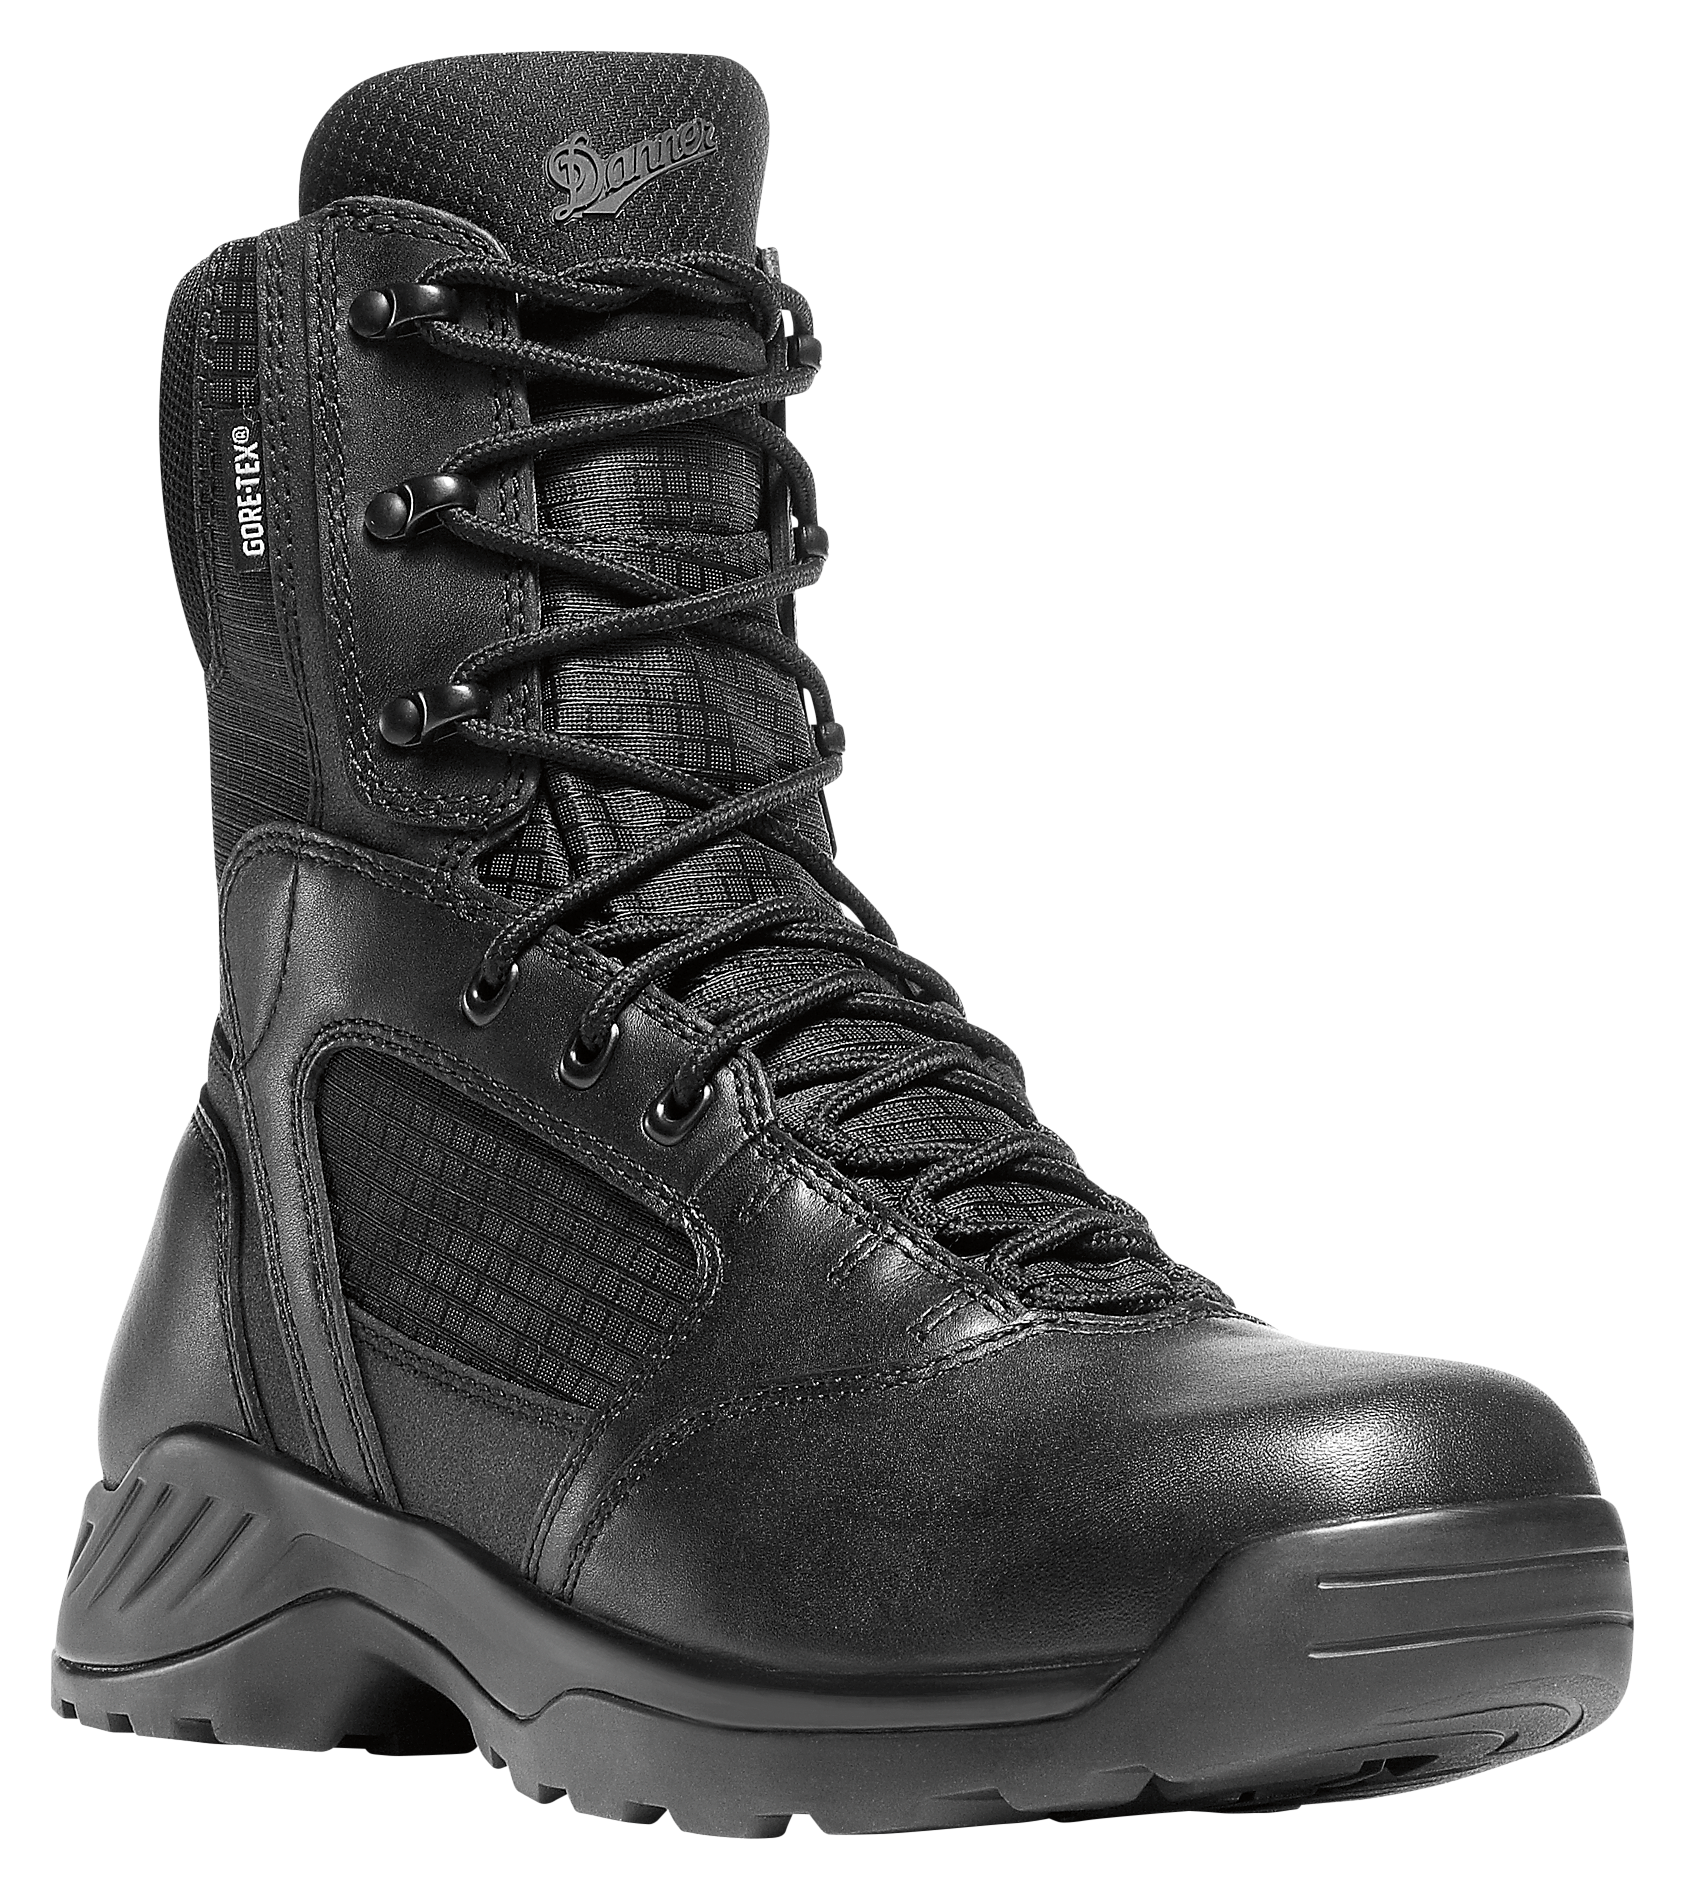 Danner Kinetic GTX Side-Zip Waterproof Tactical Duty Boots for Men - Black - 16M